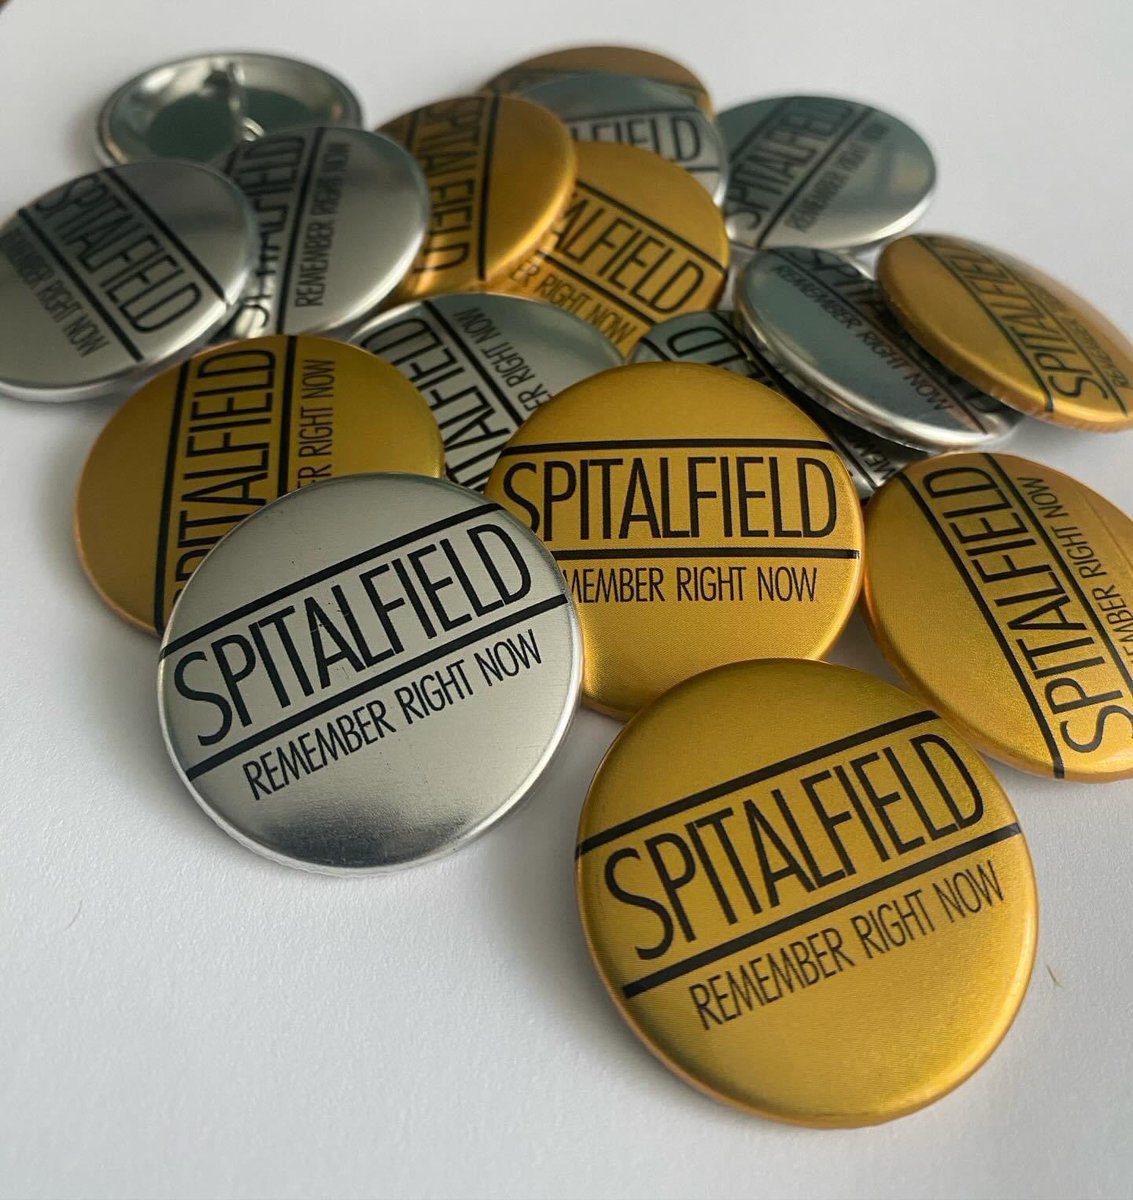 We like big buttons & we cannot lie. @Spitalfield98